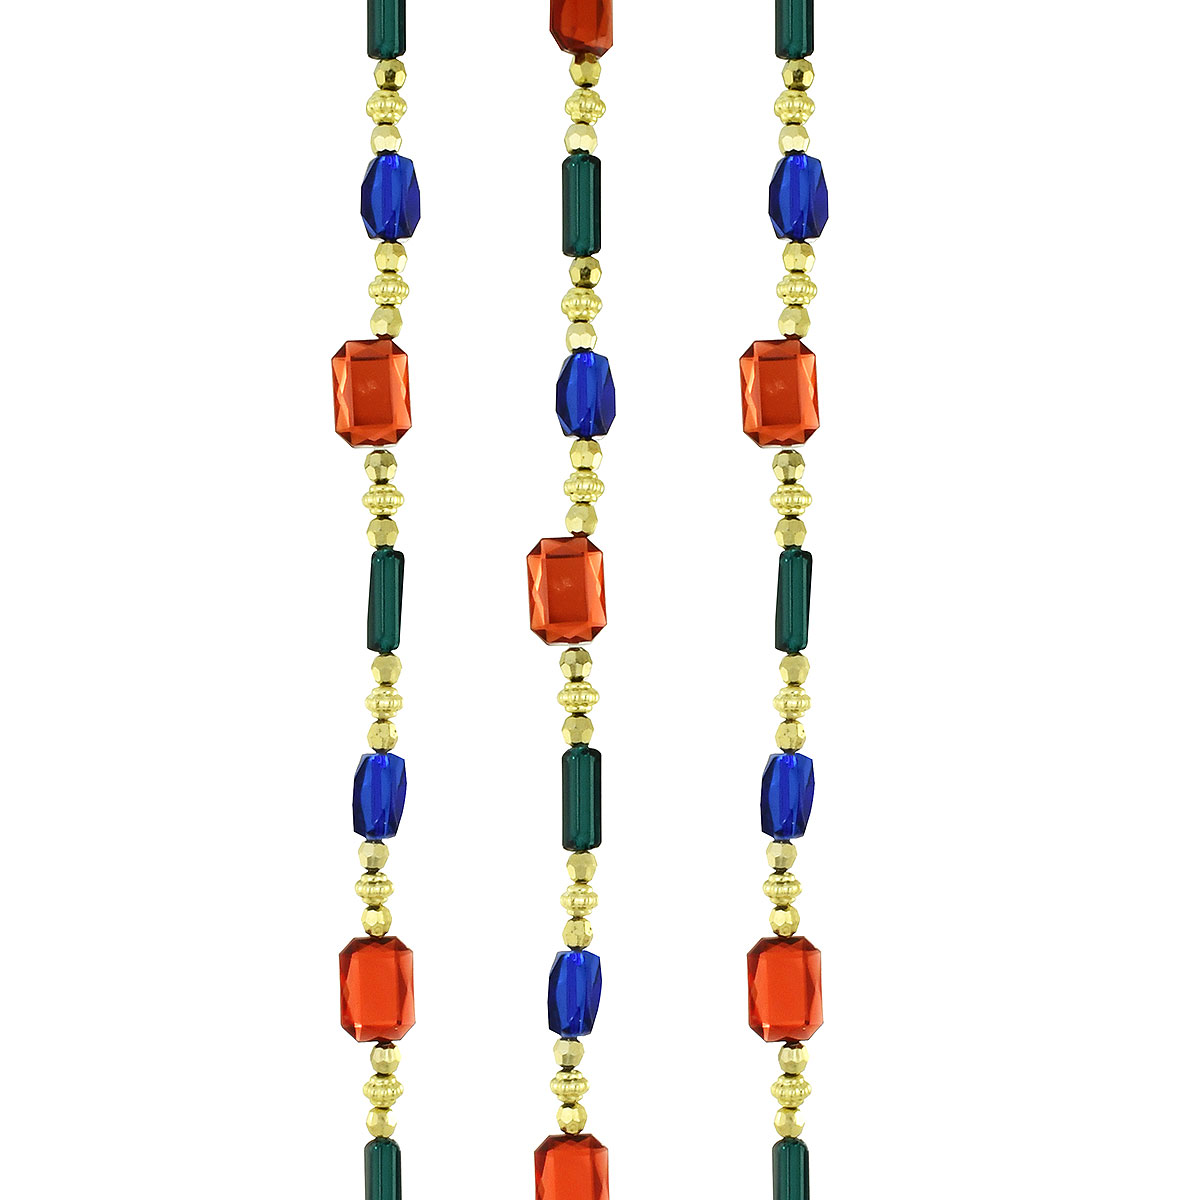 6' Multi-Colored Jewel Garland